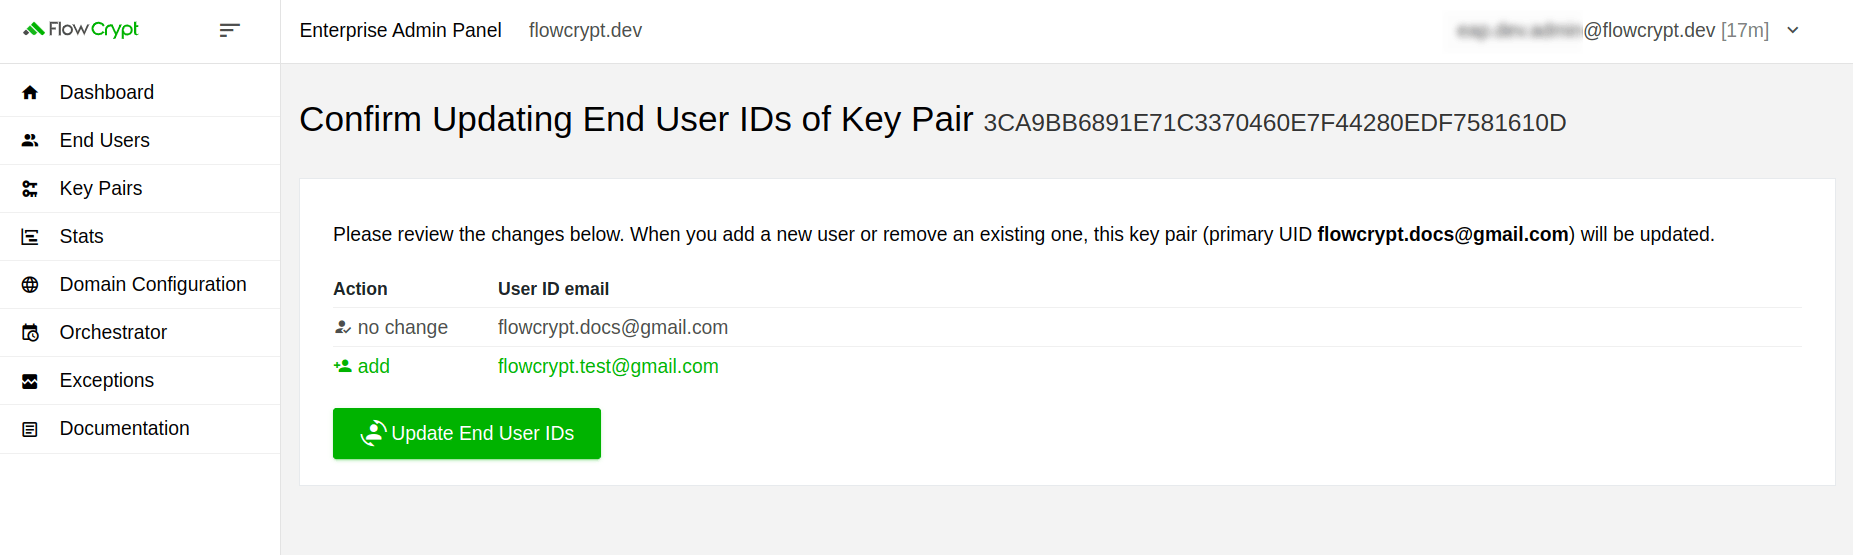 enterprise eap usage key pairs manage keys details manage user ids add confirm adding user id